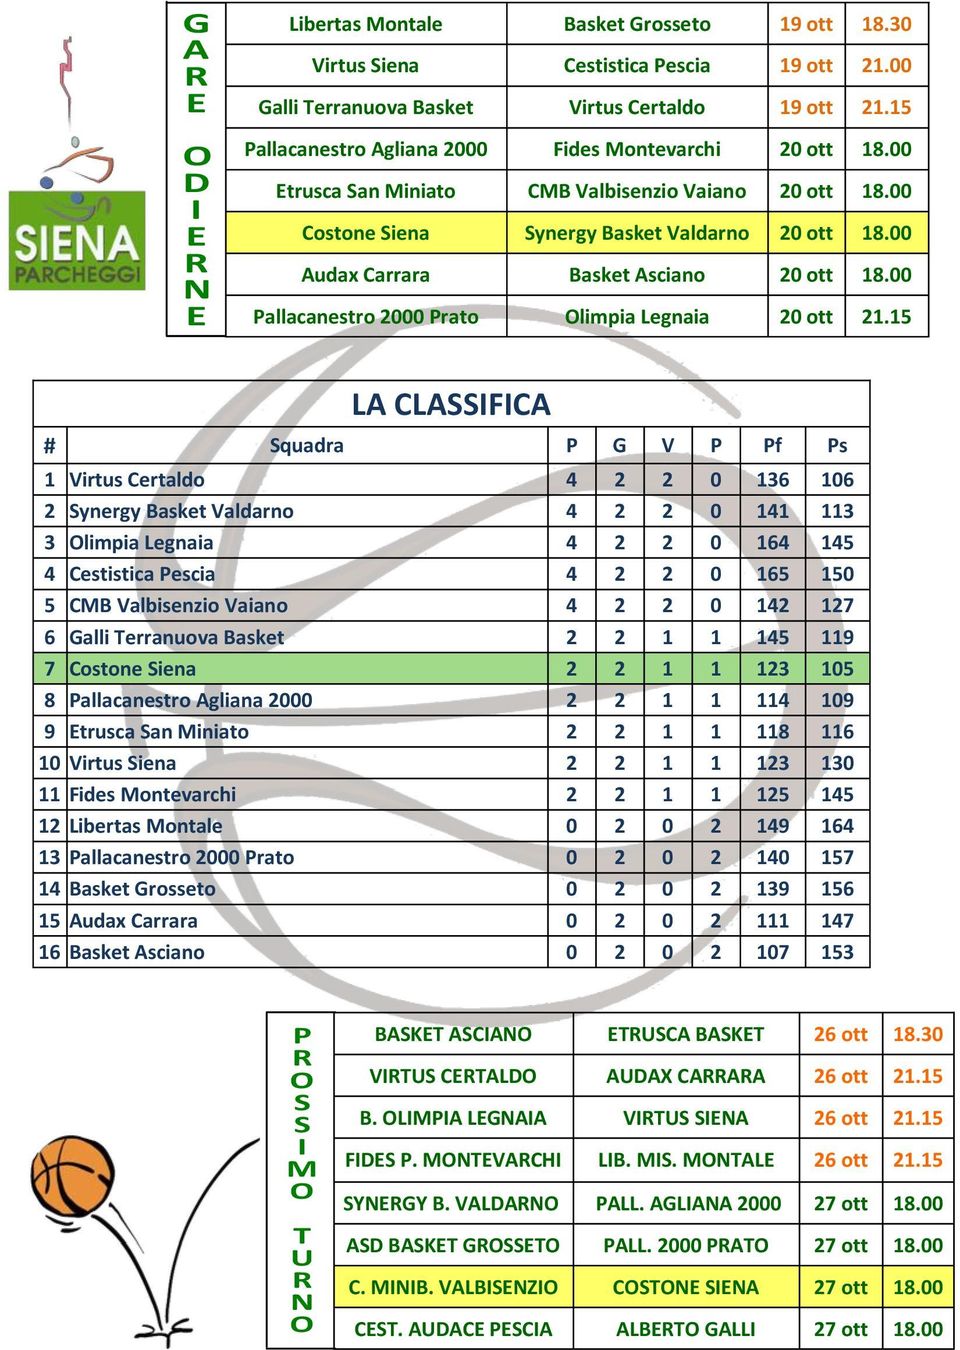 00 Audax Carrara Basket Asciano 20 ott 18.00 Pallacanestro 2000 Prato Olimpia Legnaia 20 ott 21.